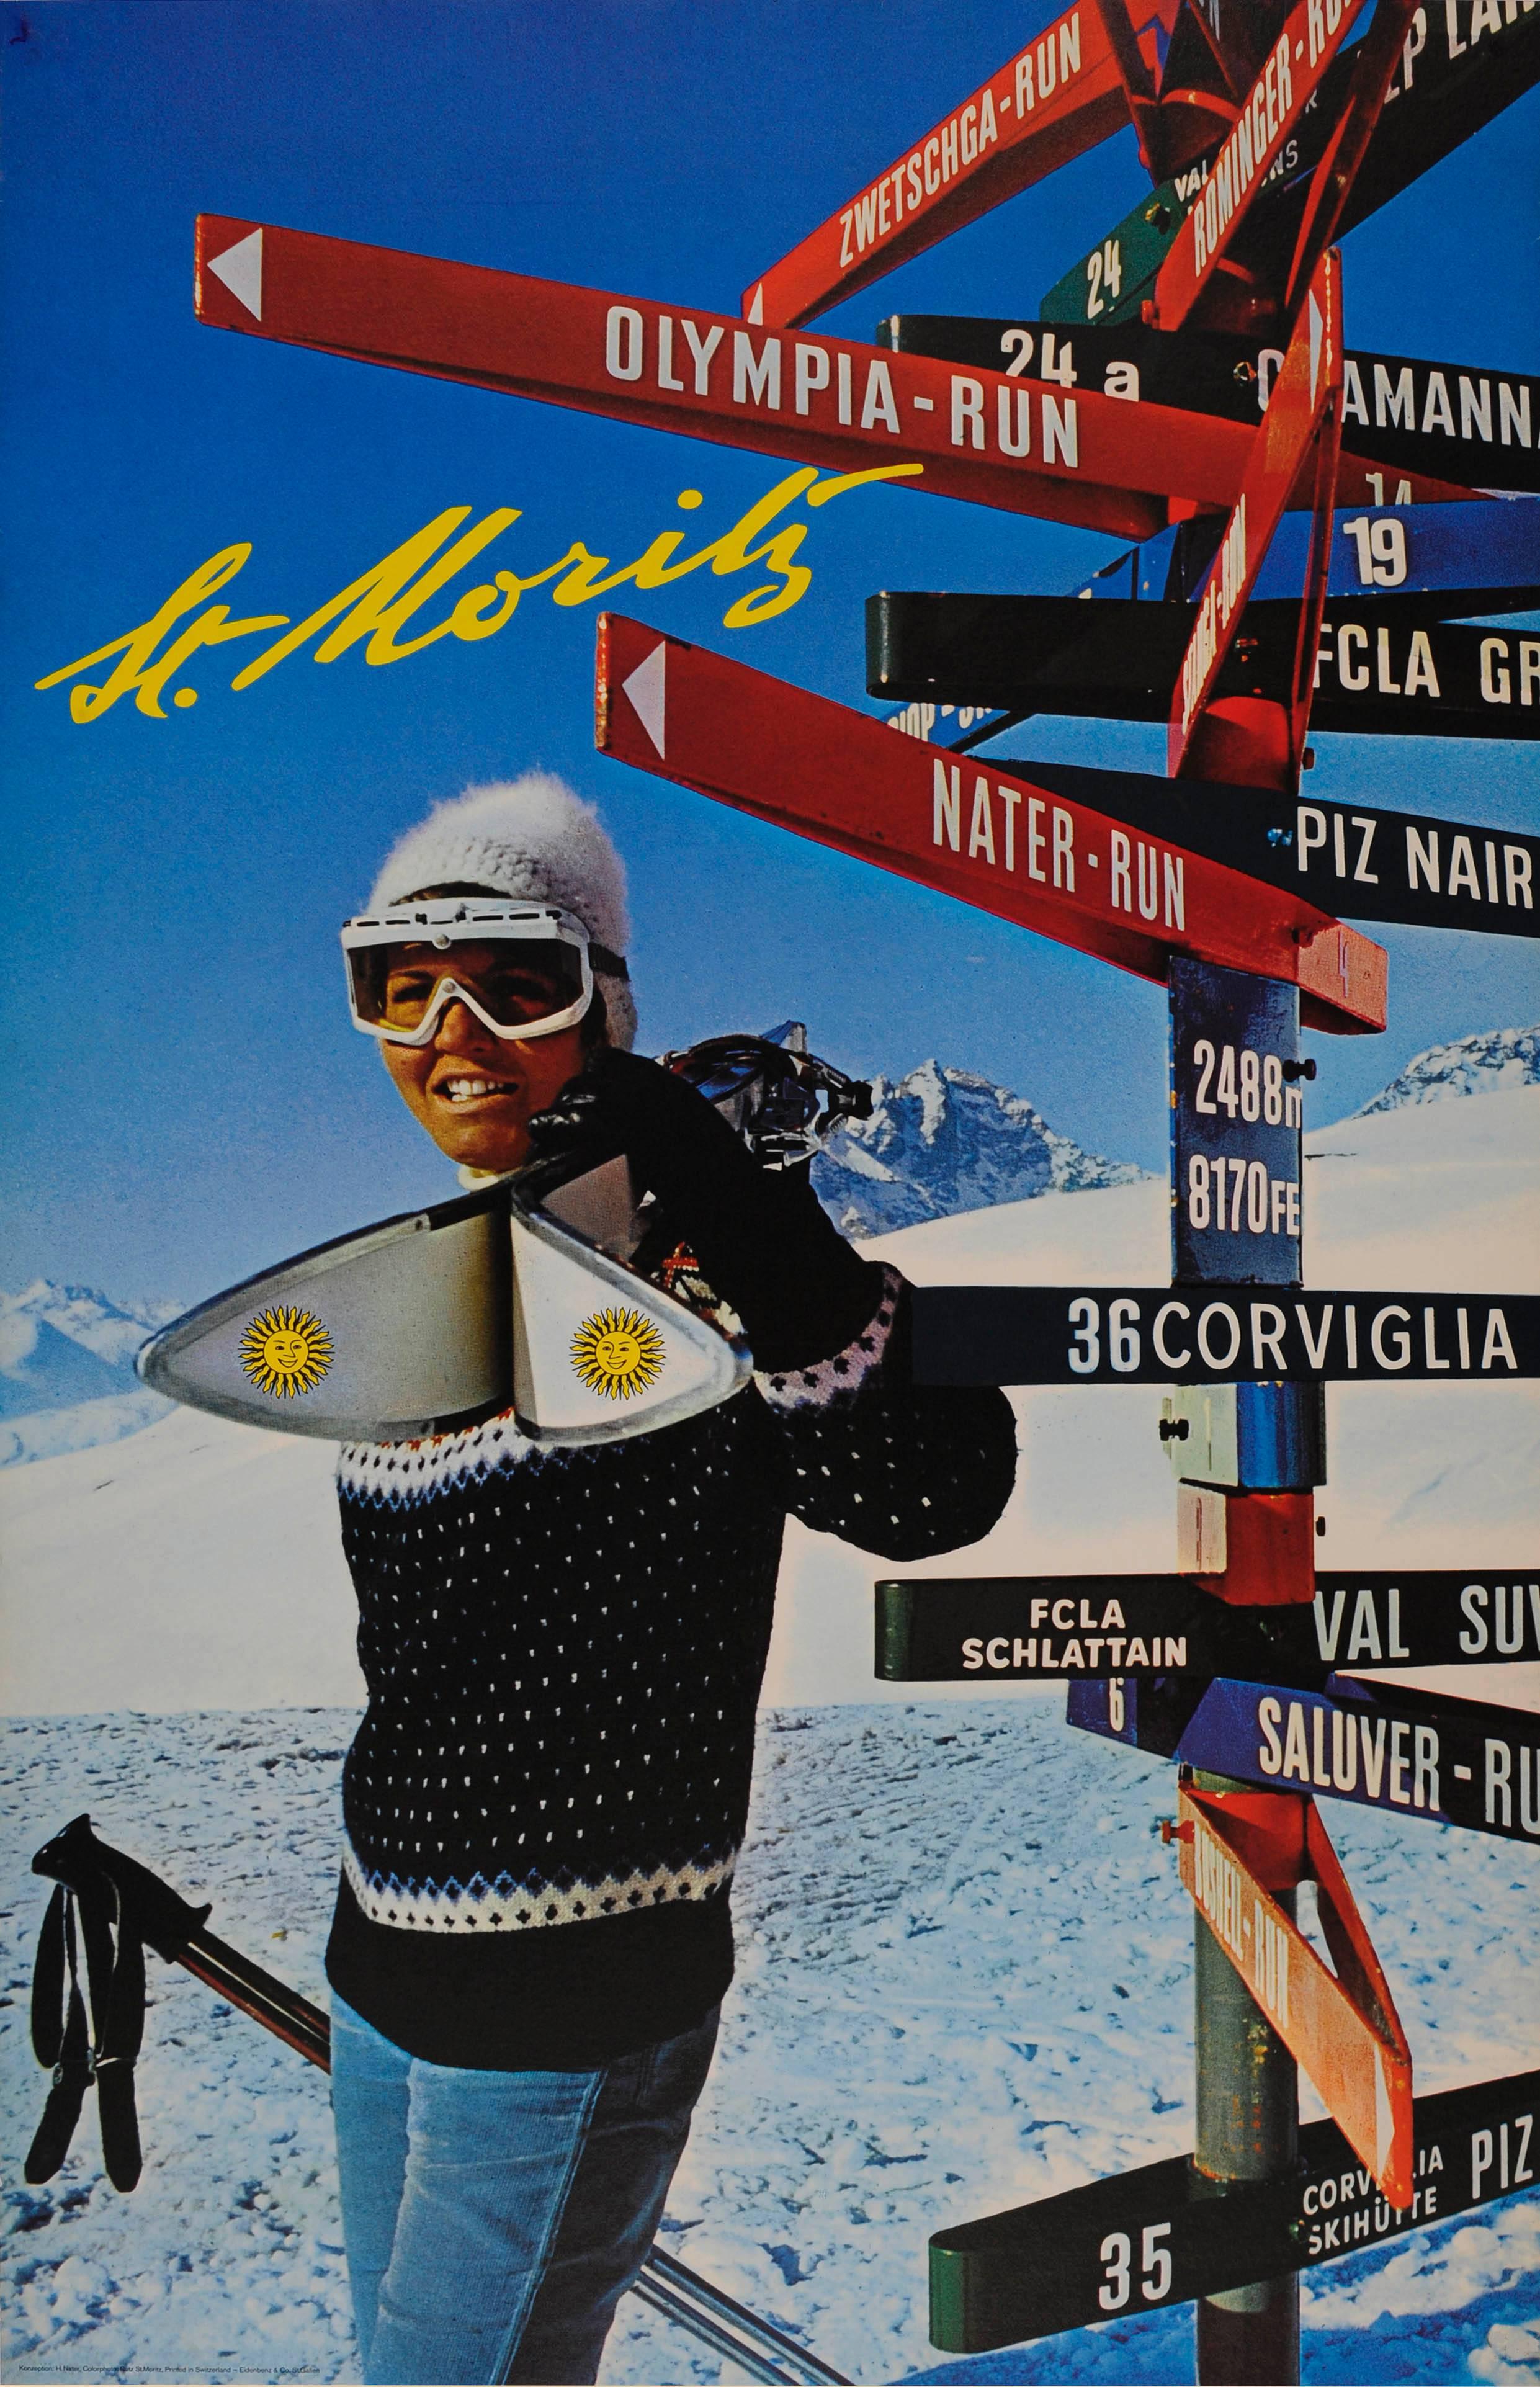 Nater Hans Print - Original Vintage 1970 Skiing Poster For St Moritz Switzerland Featuring A Skier